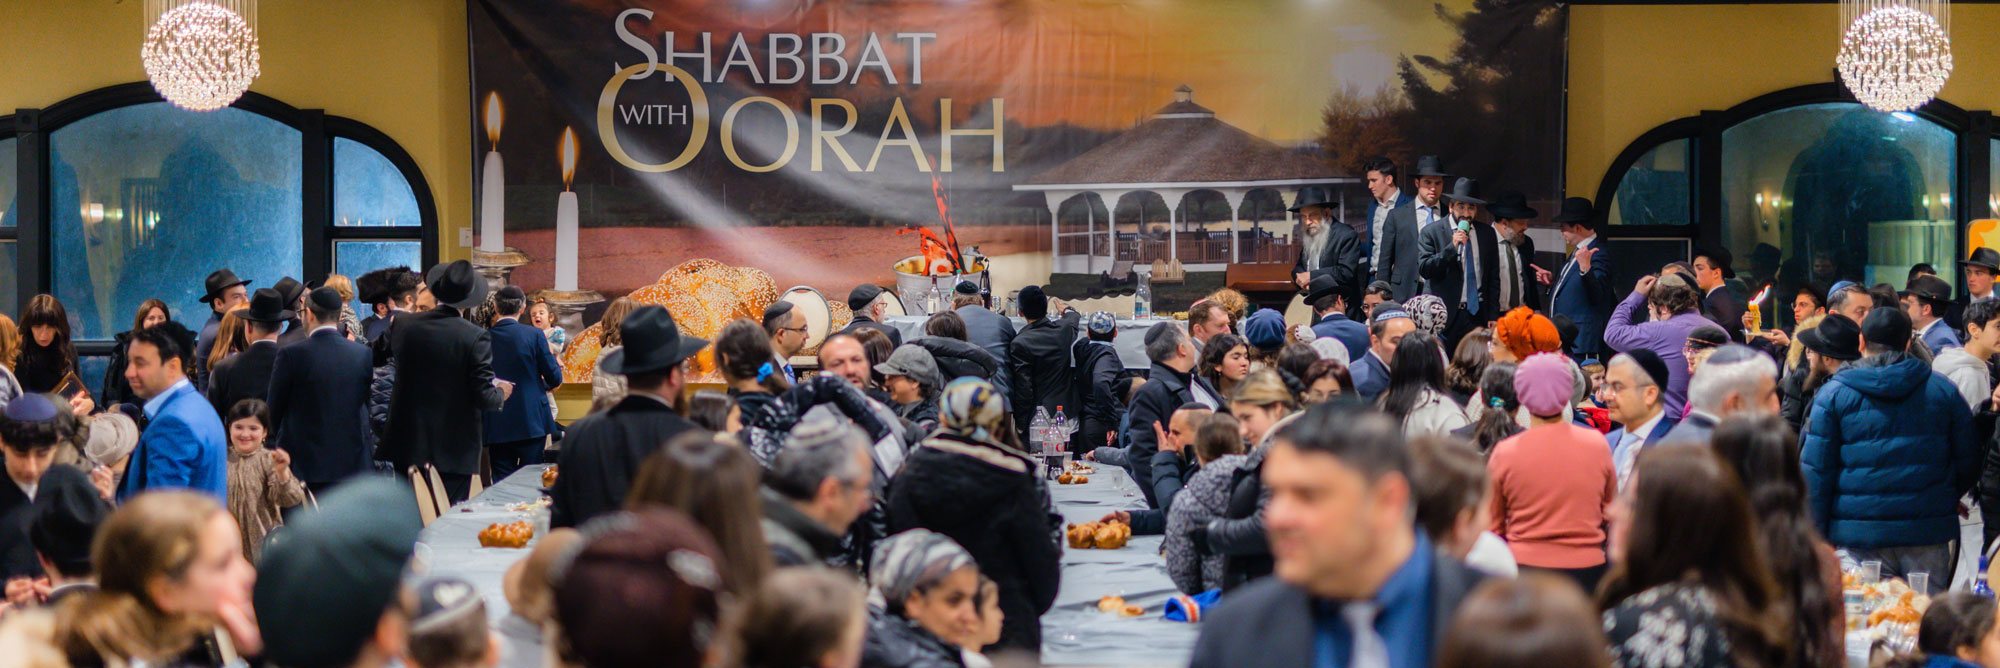 Shabbat with Oorah